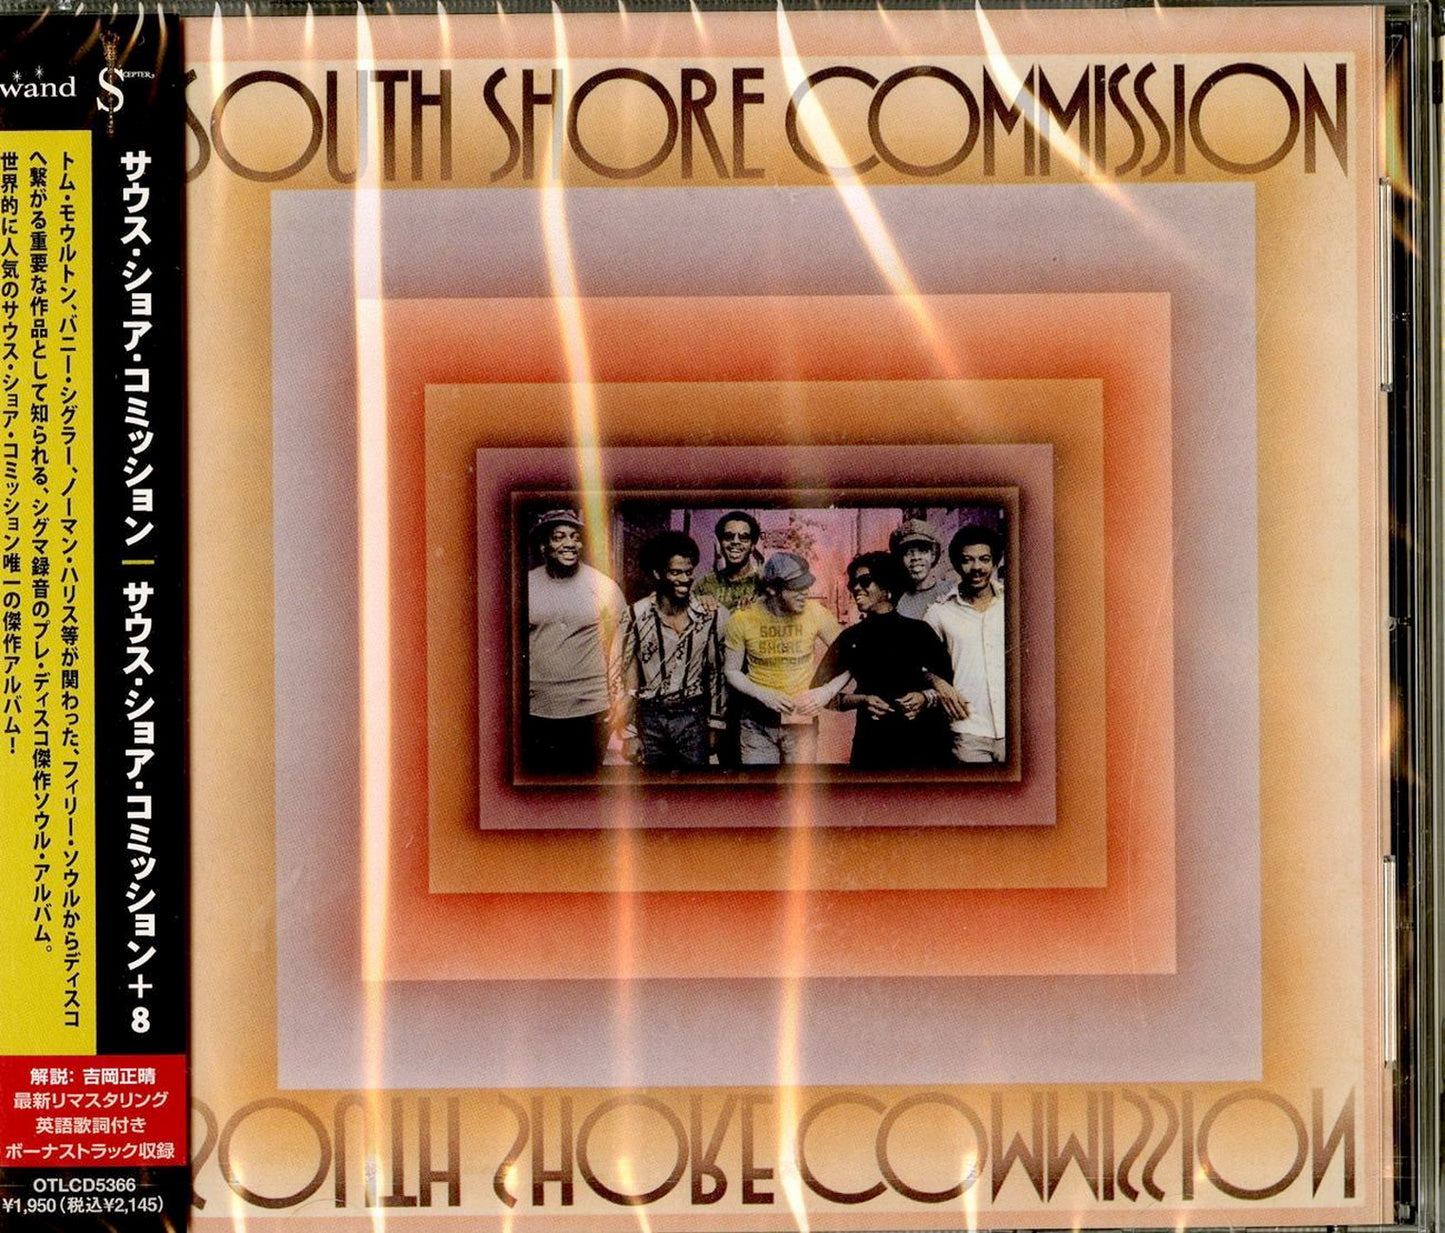 South Shore Commission - South Shore Commission +8 - Japan  CD Bonus Track